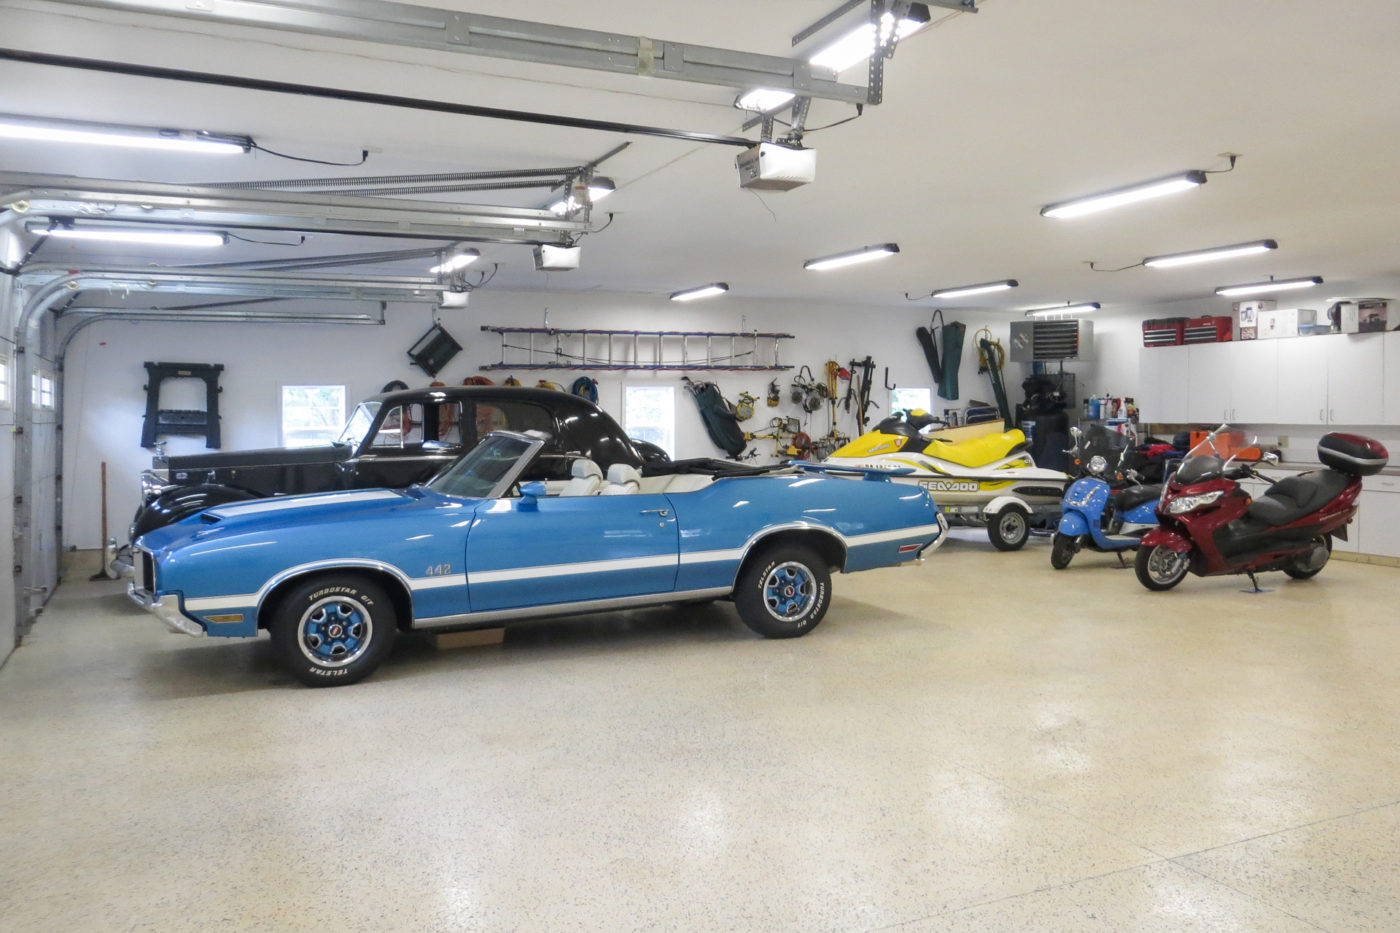 Interior of a single-story four-car detached garage